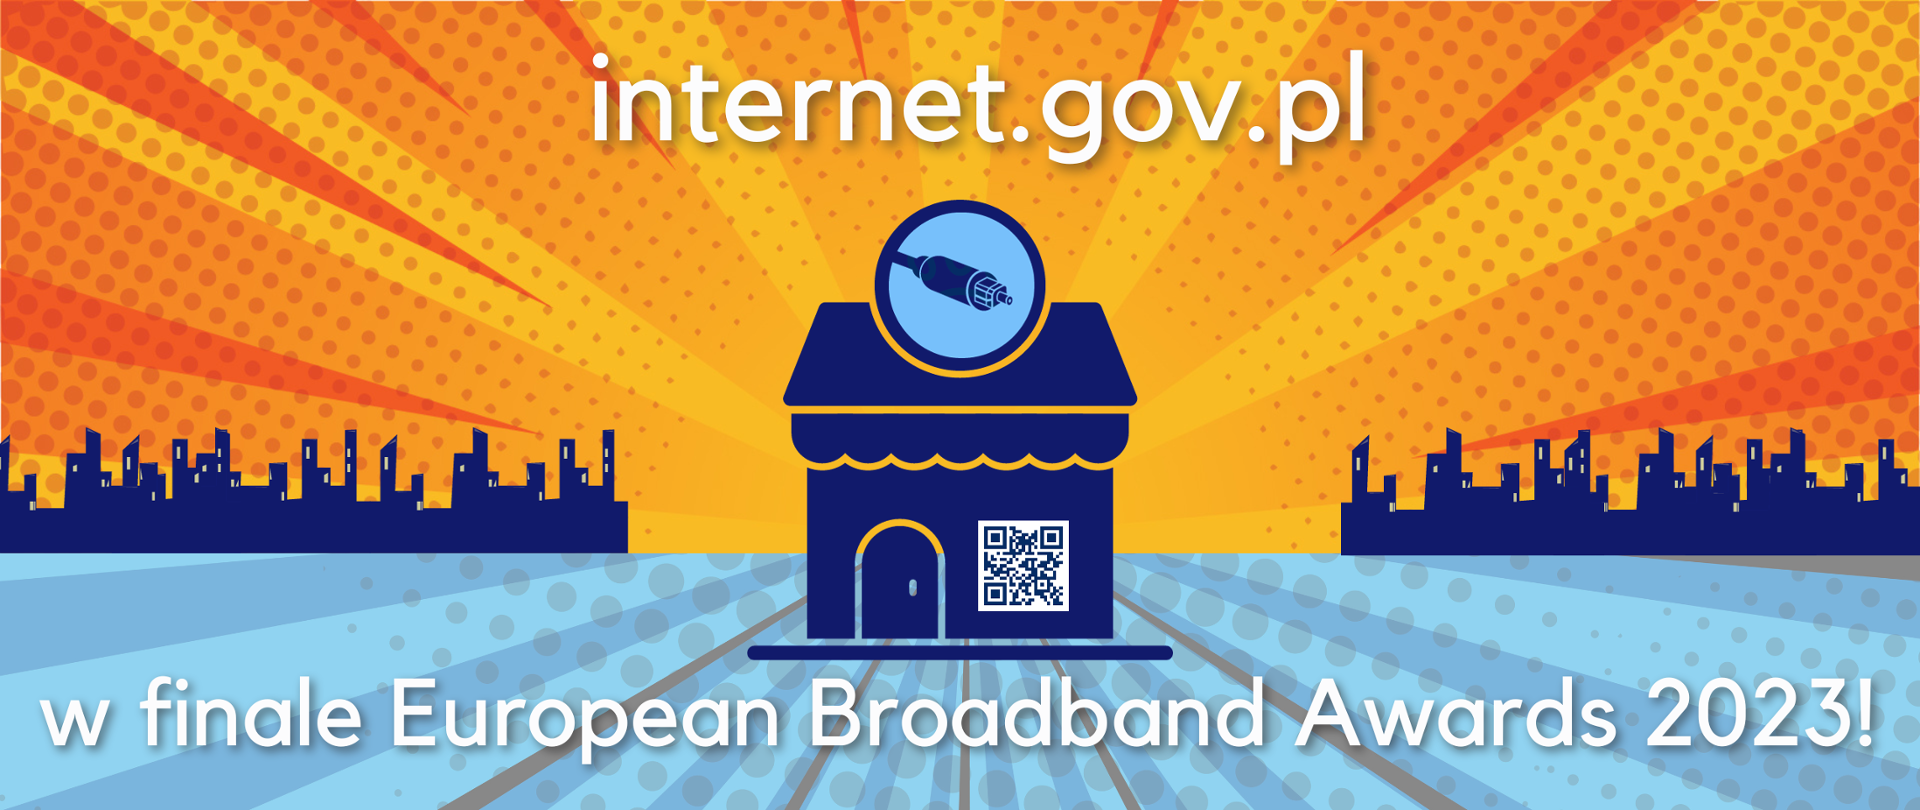 Internet.gov.pl finalistą European Broadband Awards 2023!